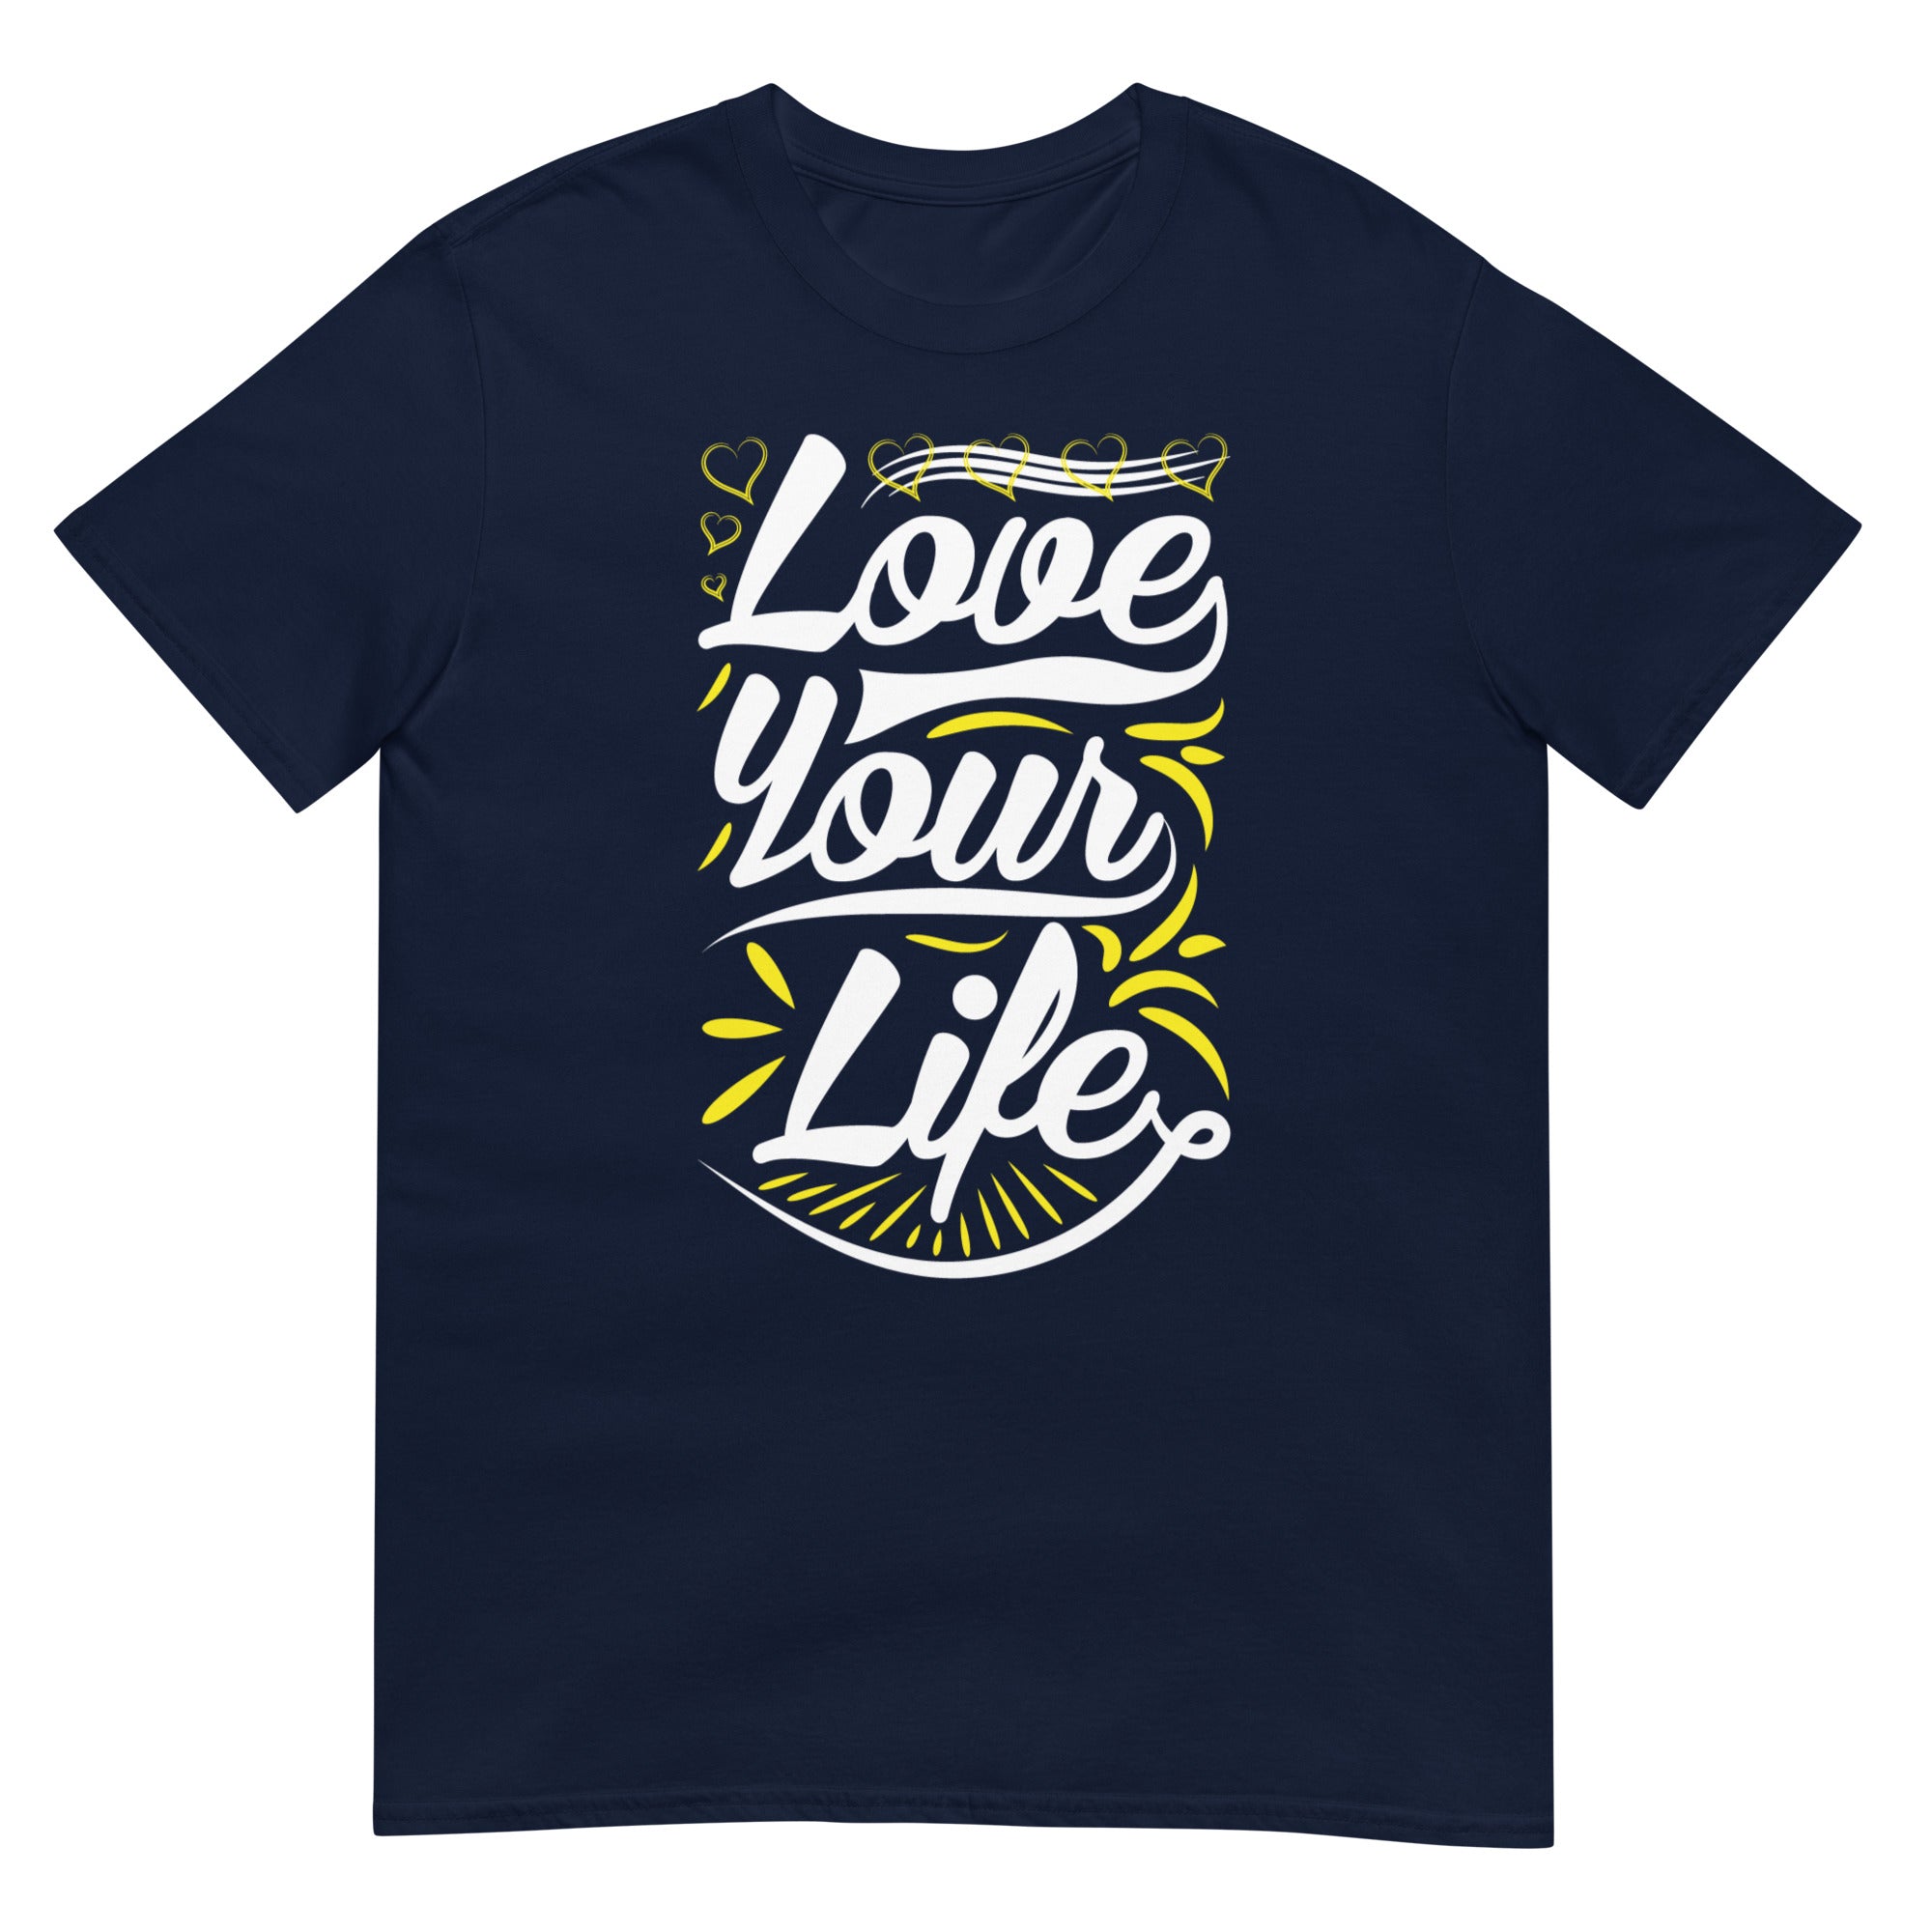 Love Your Life - Short-Sleeve Unisex T-Shirt